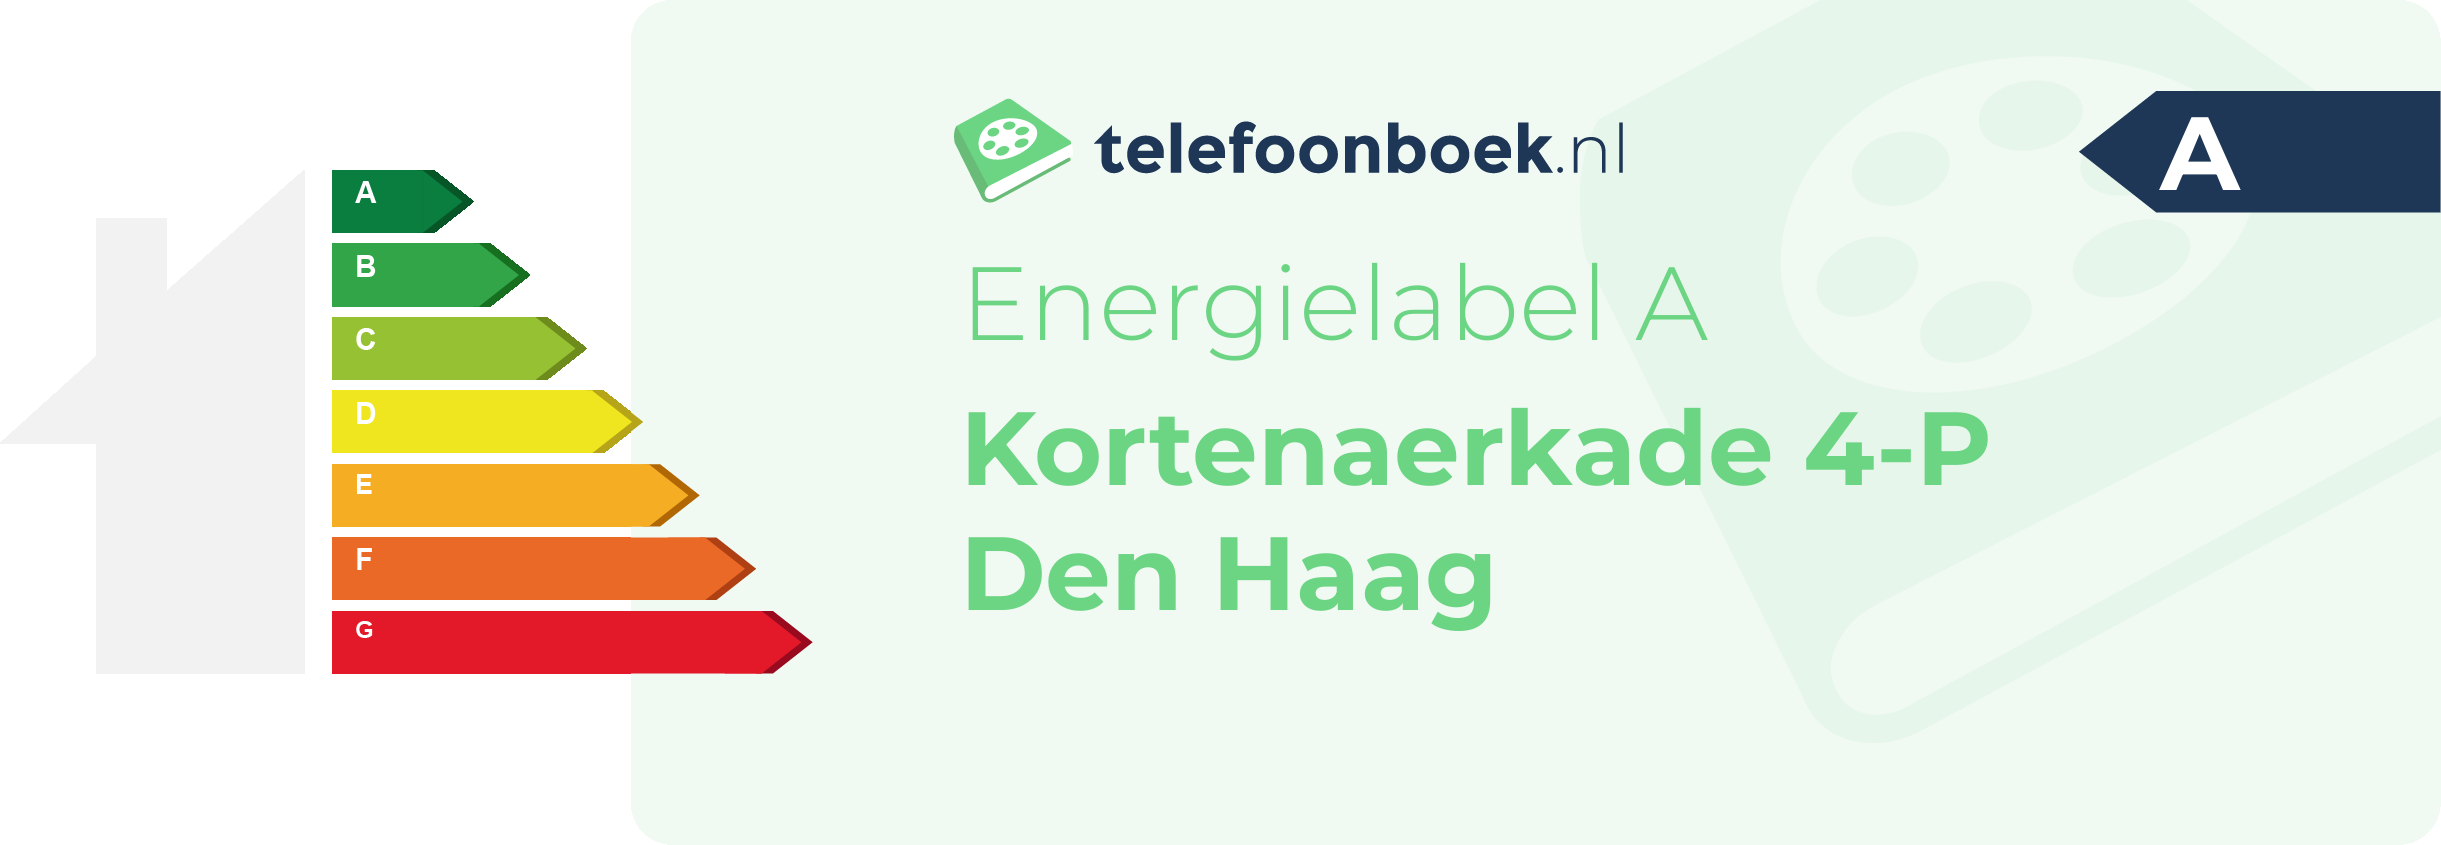 Energielabel Kortenaerkade 4-P Den Haag